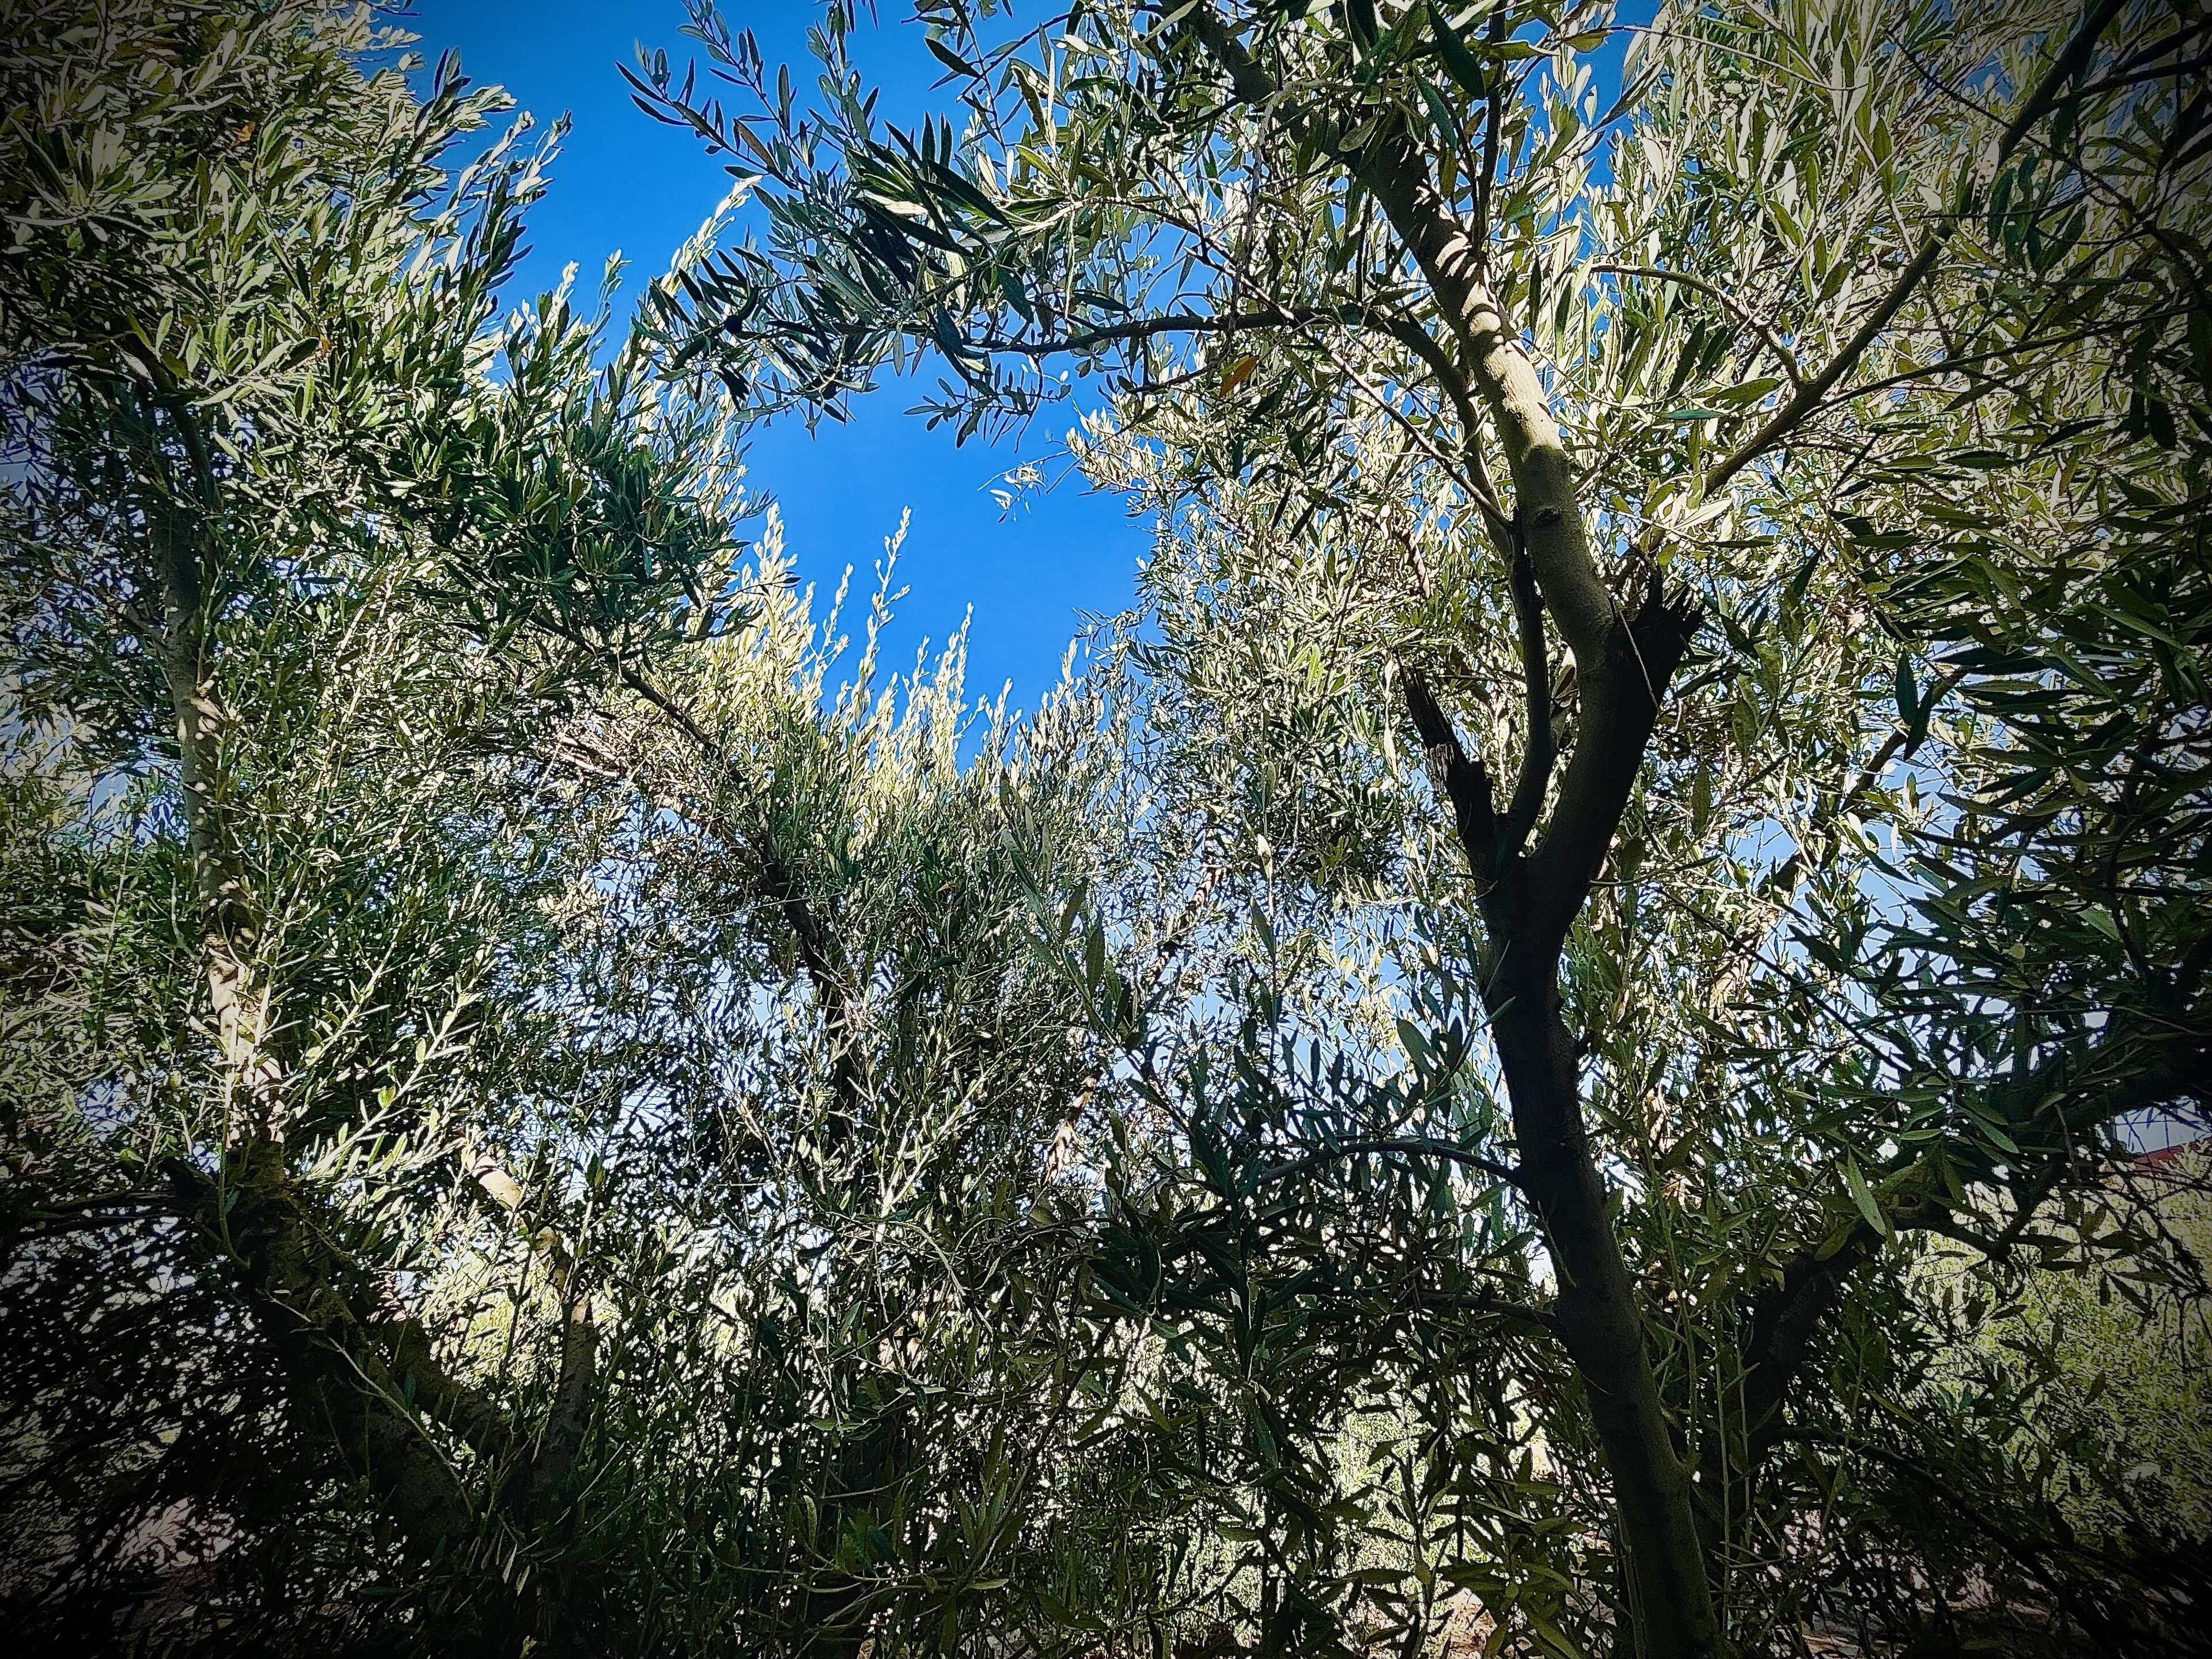 The Olives Sanctuary